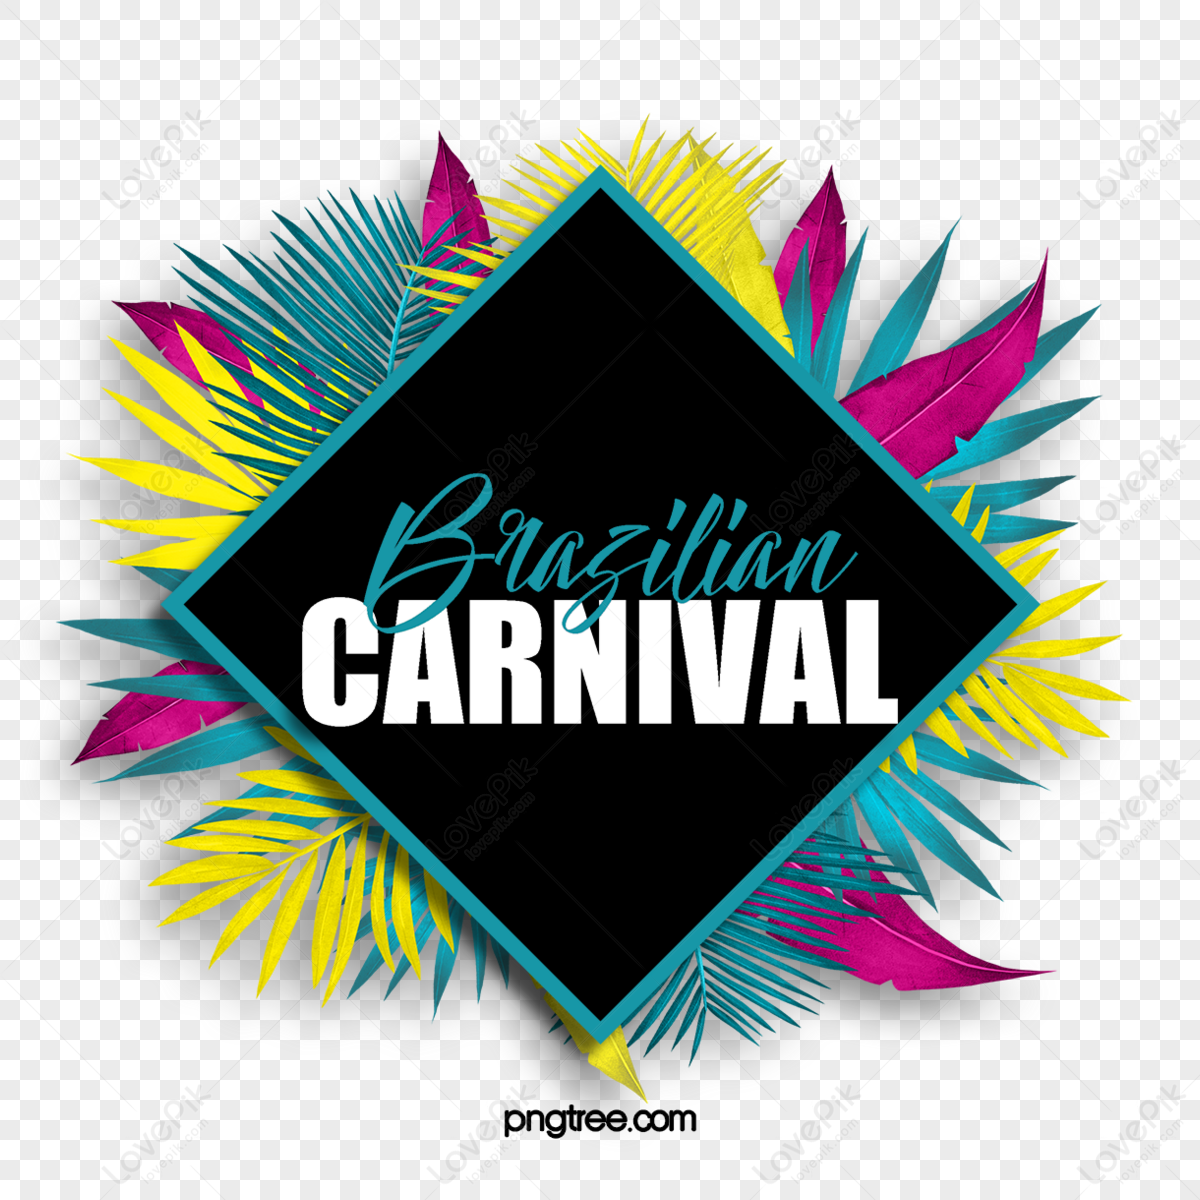 Carnival Vector Logo - Download Free SVG Icon | Worldvectorlogo